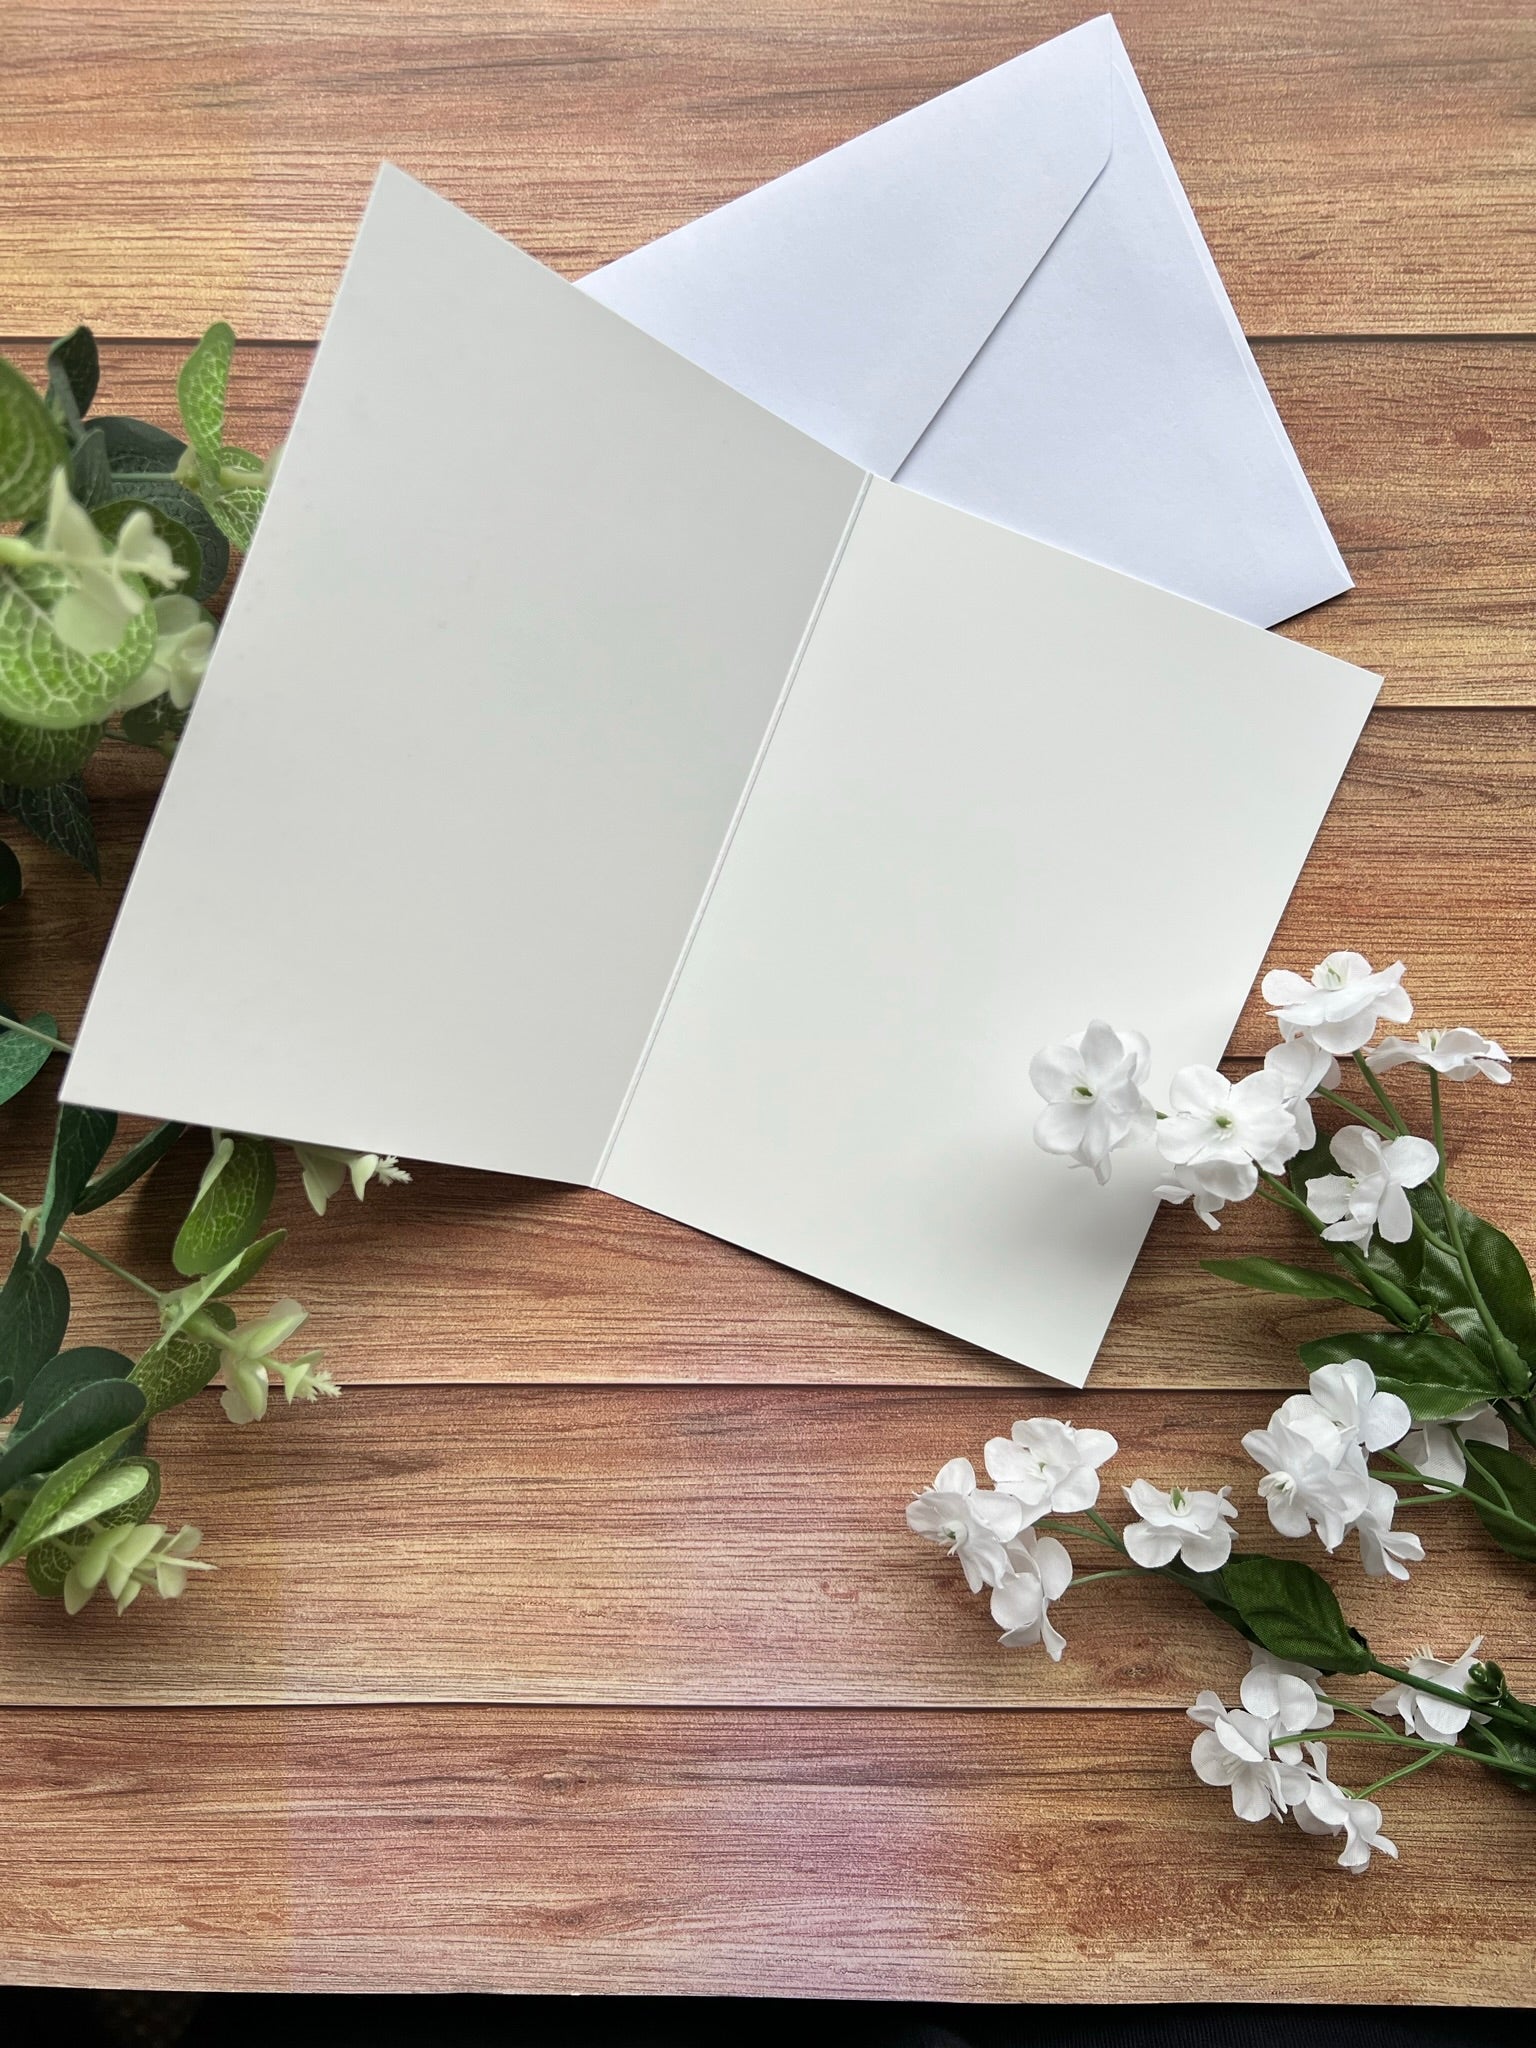 blank panda greetings card with white envelope